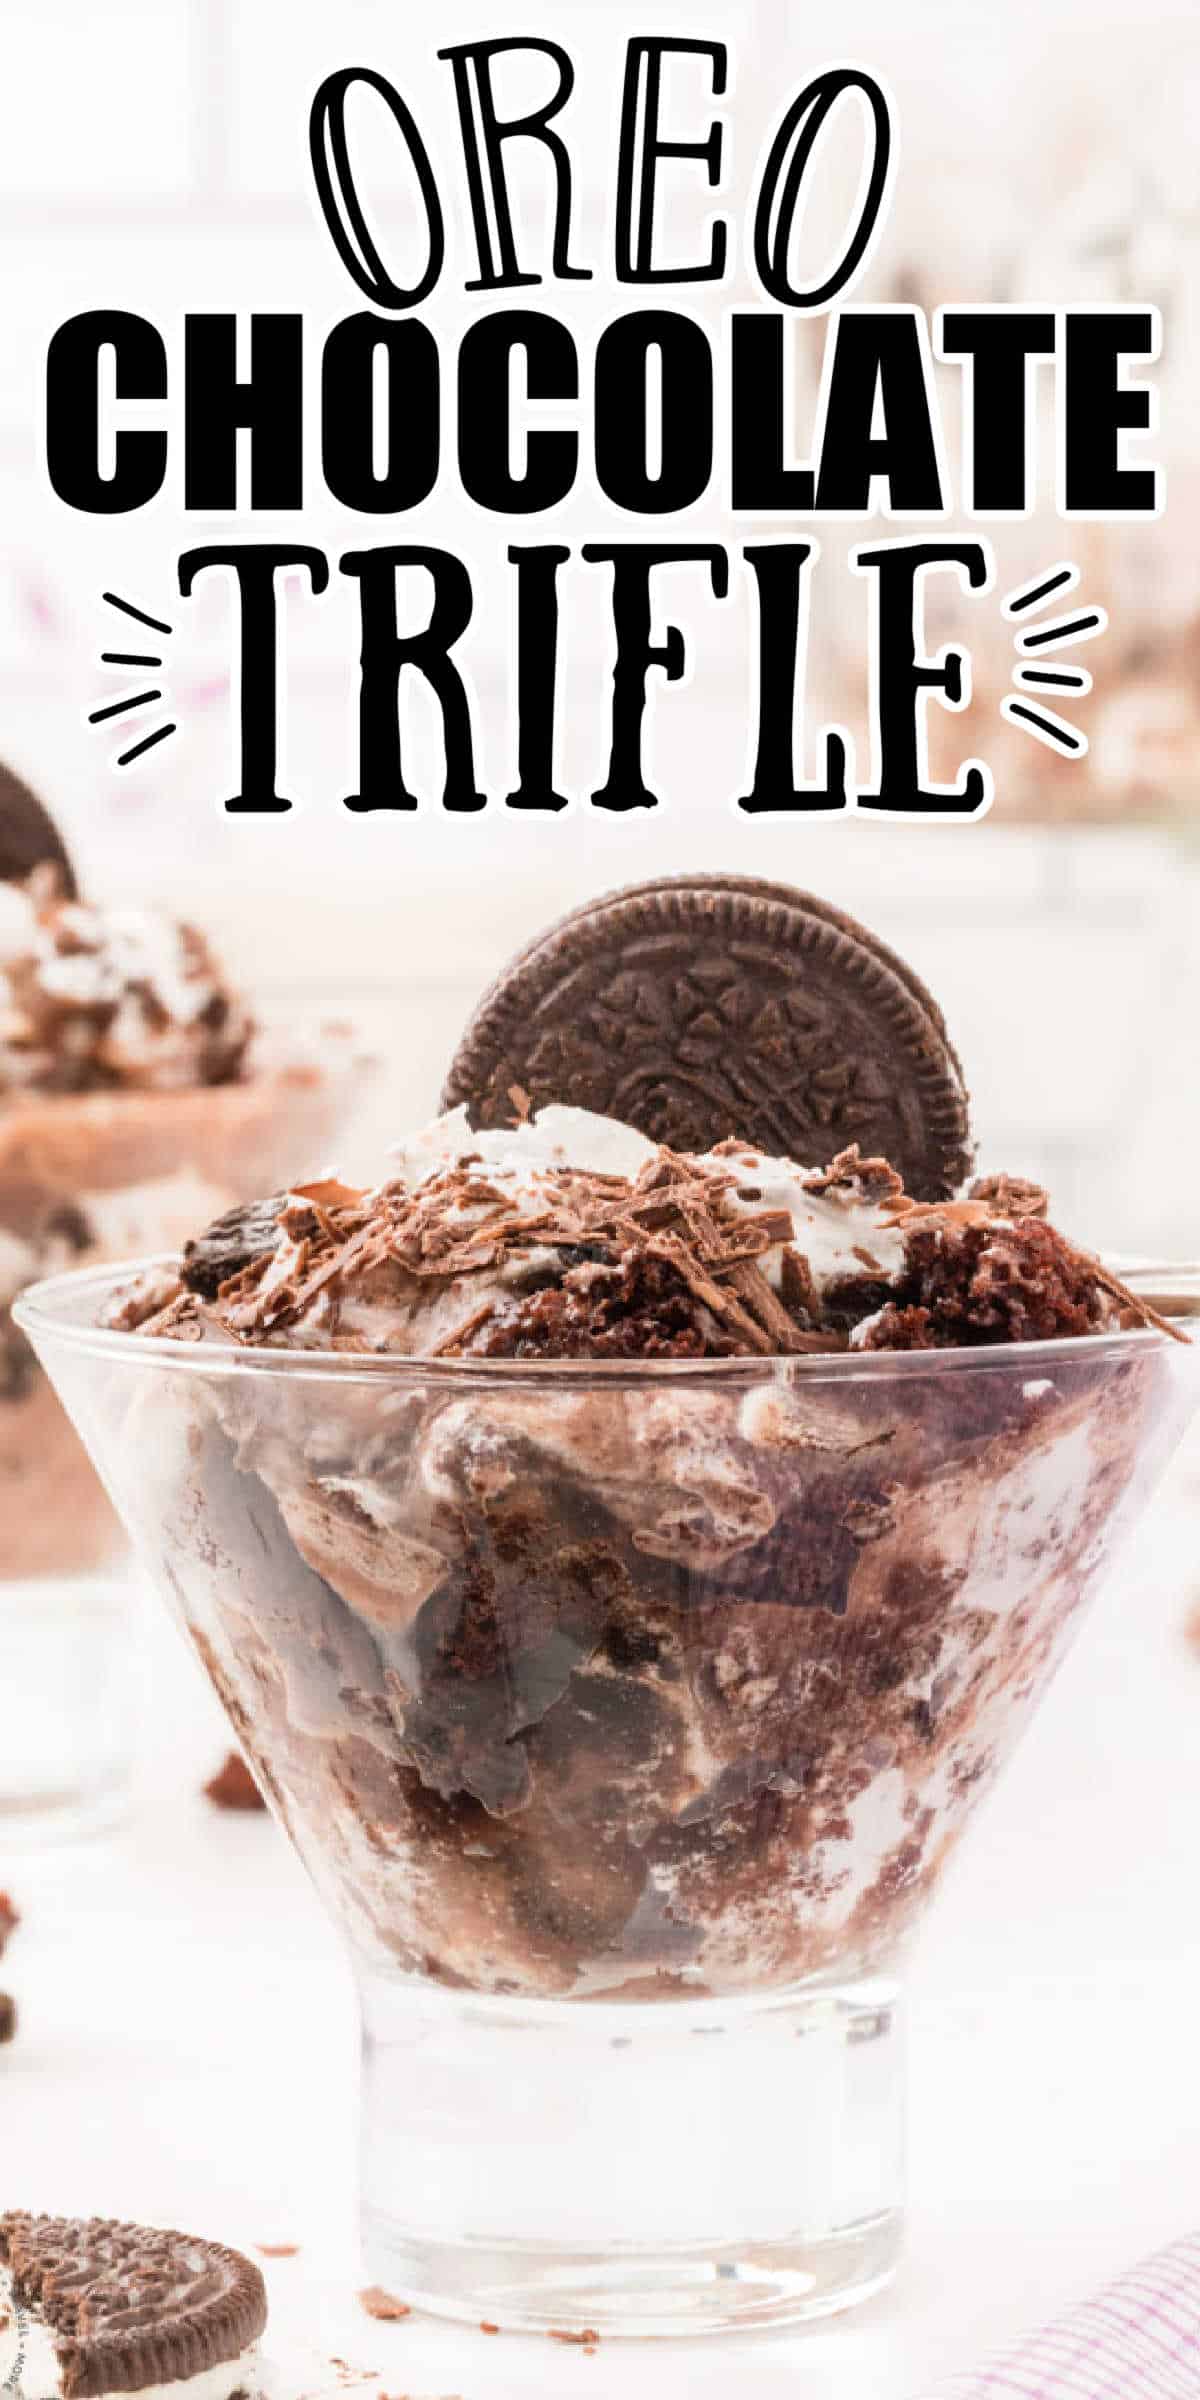 Chocolate Trifle Recipe - Easy to Make chocolate Layer Dessert